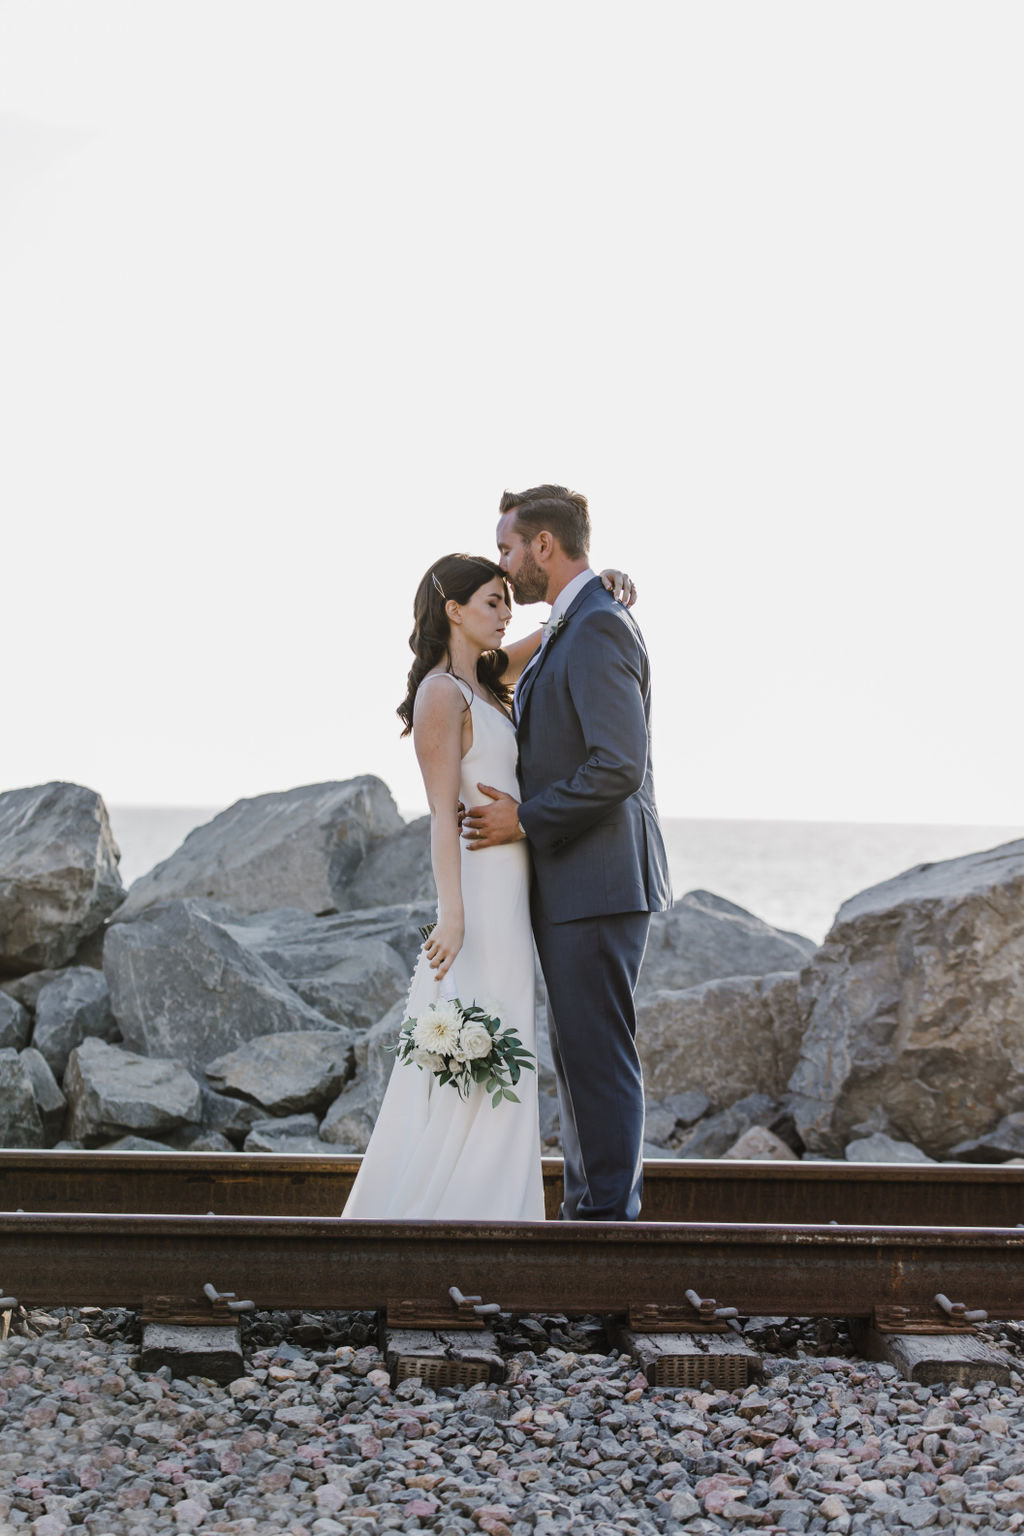 Beautiful wedding at Modern La Ventura for James and Daniela. Photography by Jessica Jaccarino.